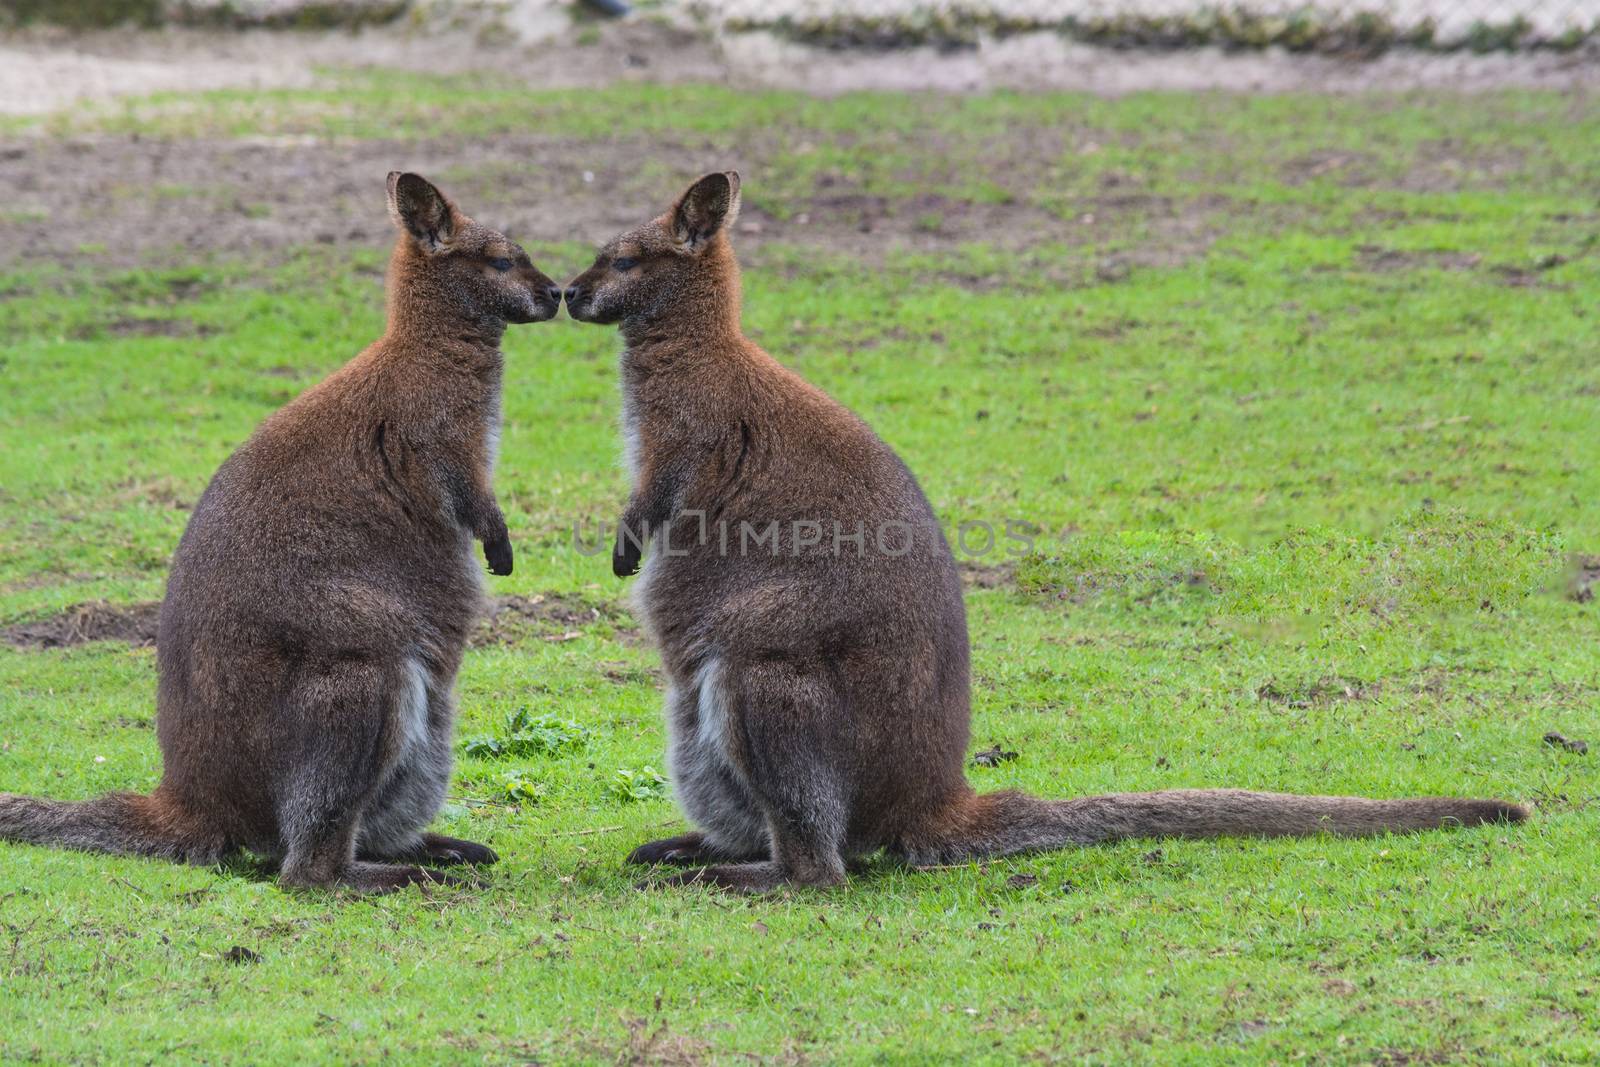 Kangaroo, swamp wallaby (Wallabia bicolor) (Macropus giganteus) in its natural habitat in the grass.